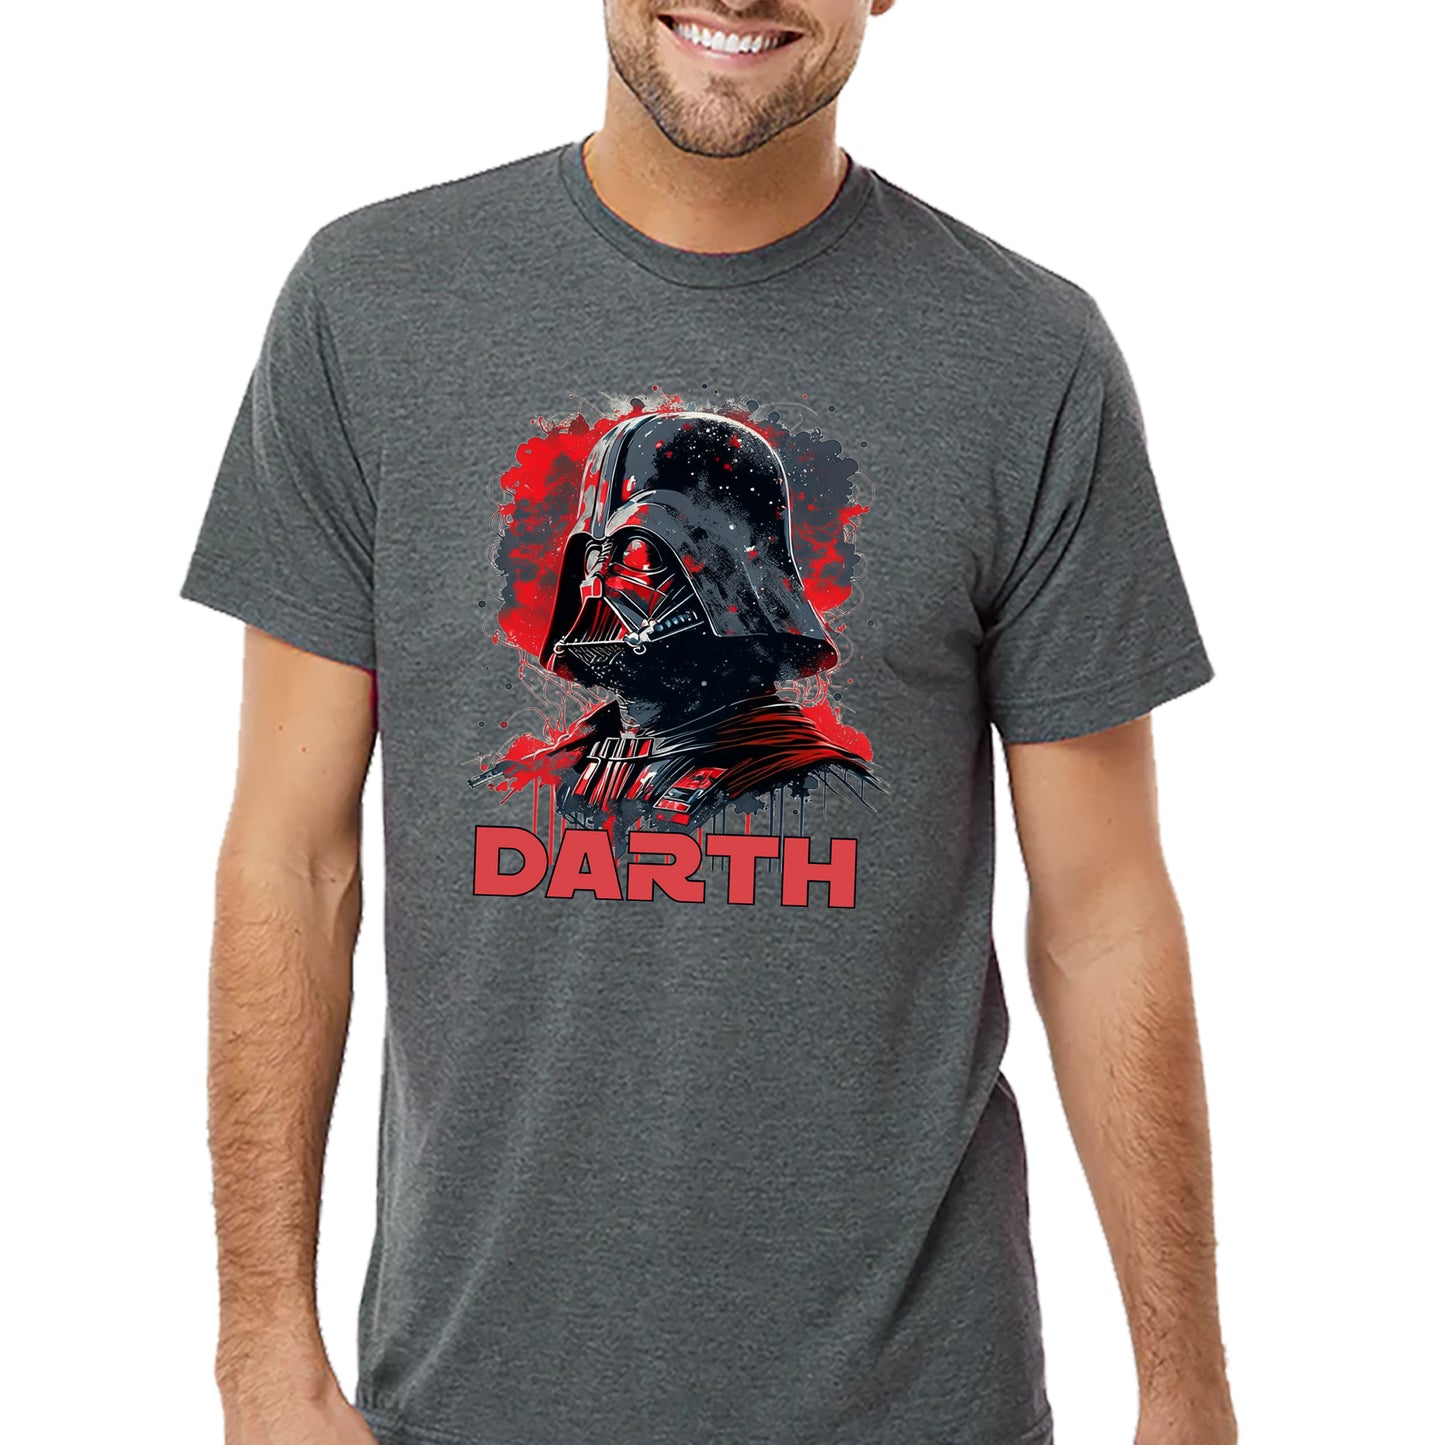 Darth T-shirt